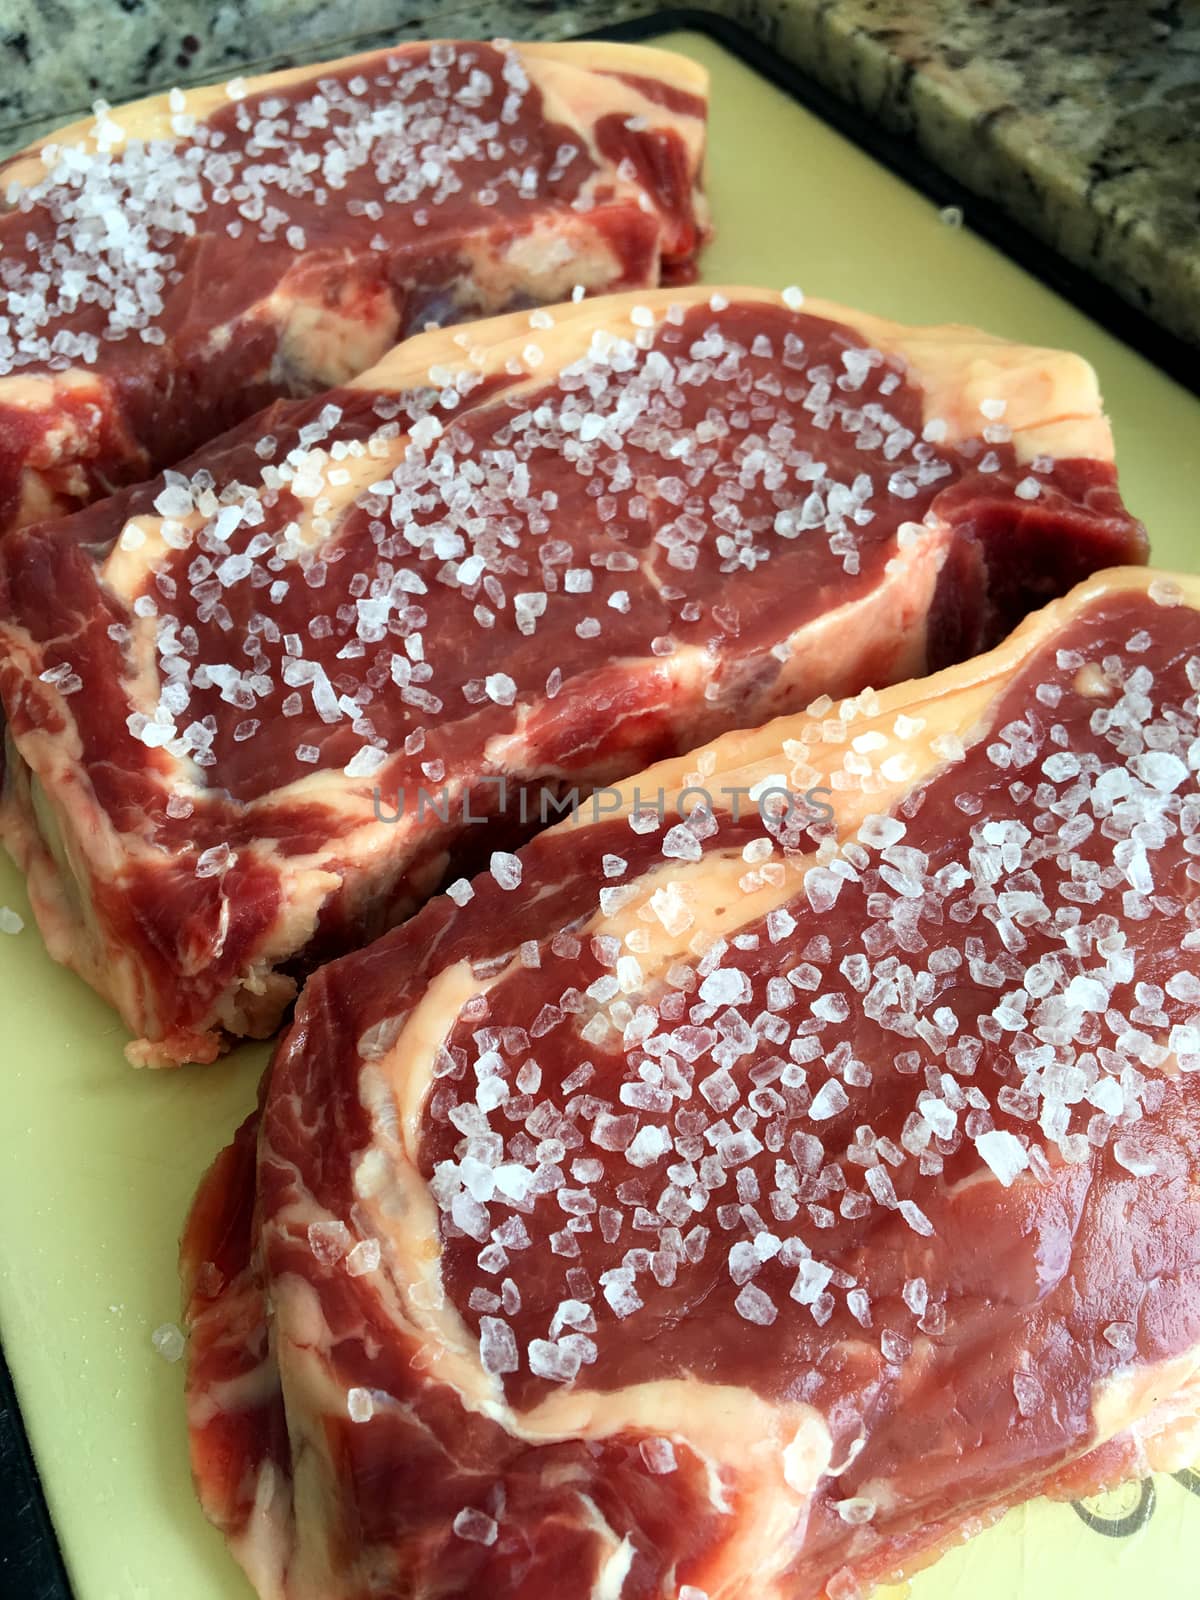 Raw beef steak by luisrftc